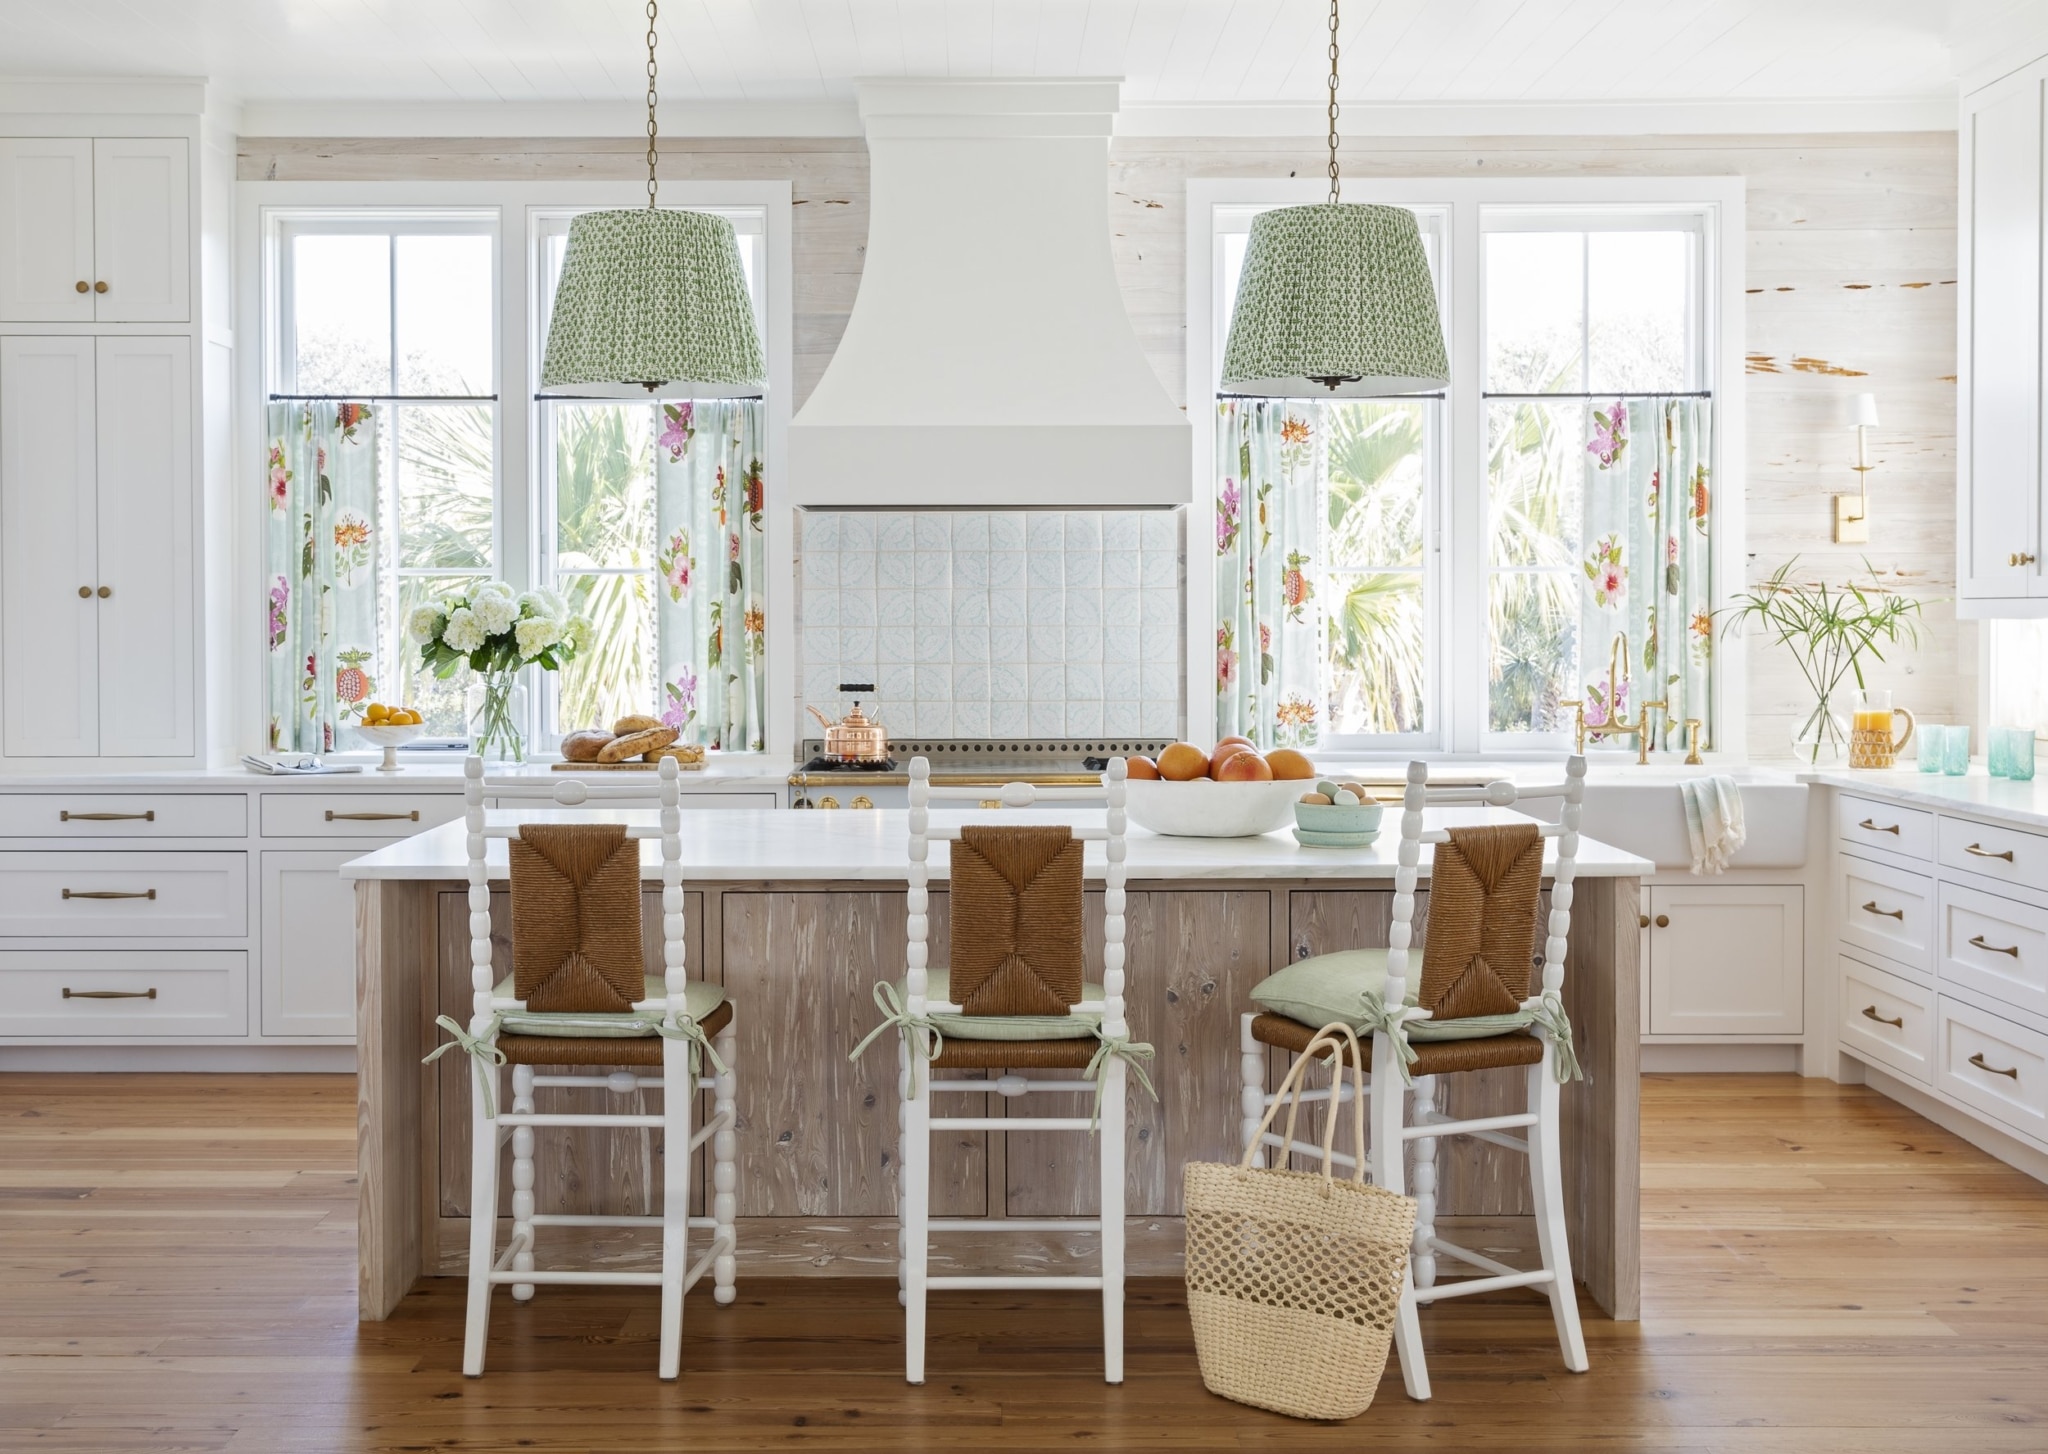 Kara Miller Interior Design - Brantley Photography - Sullivan's Island home - living room